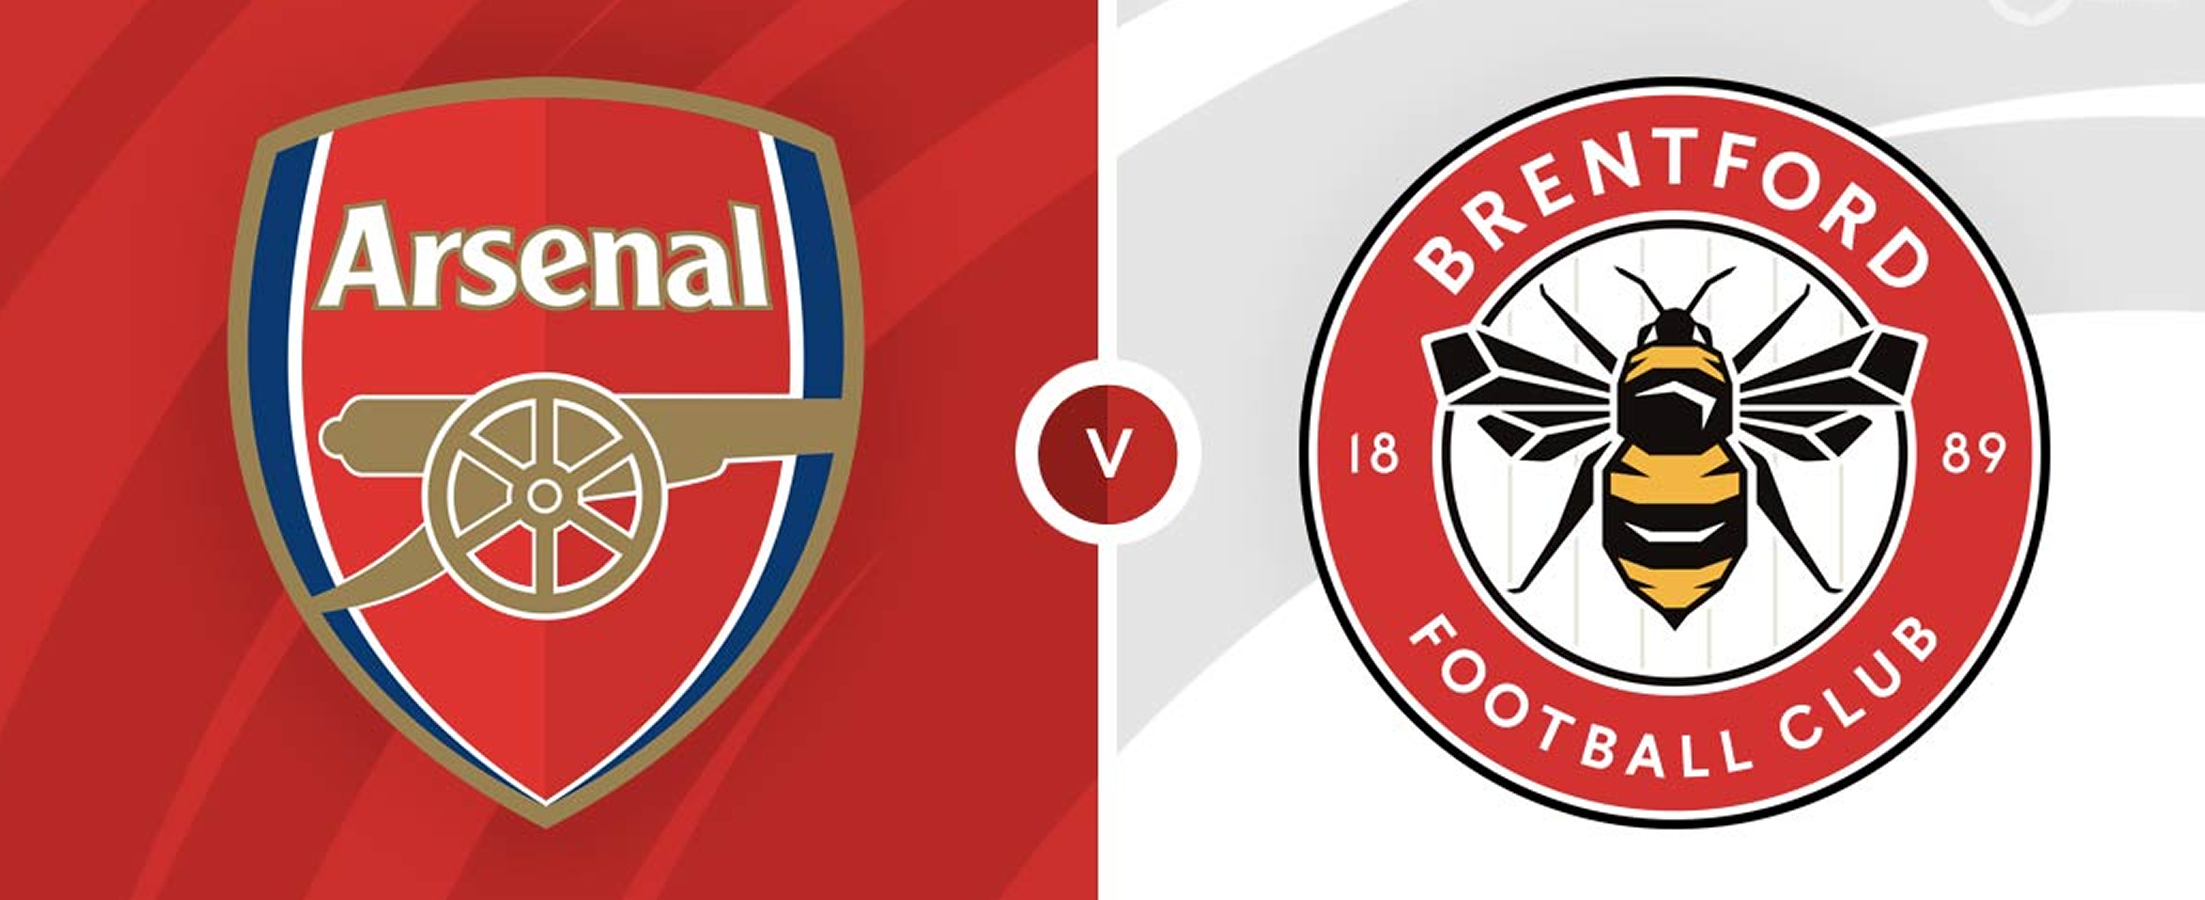 Arsenal v Brentford English Premier League Match,Team News,Goal Scorers and Stats